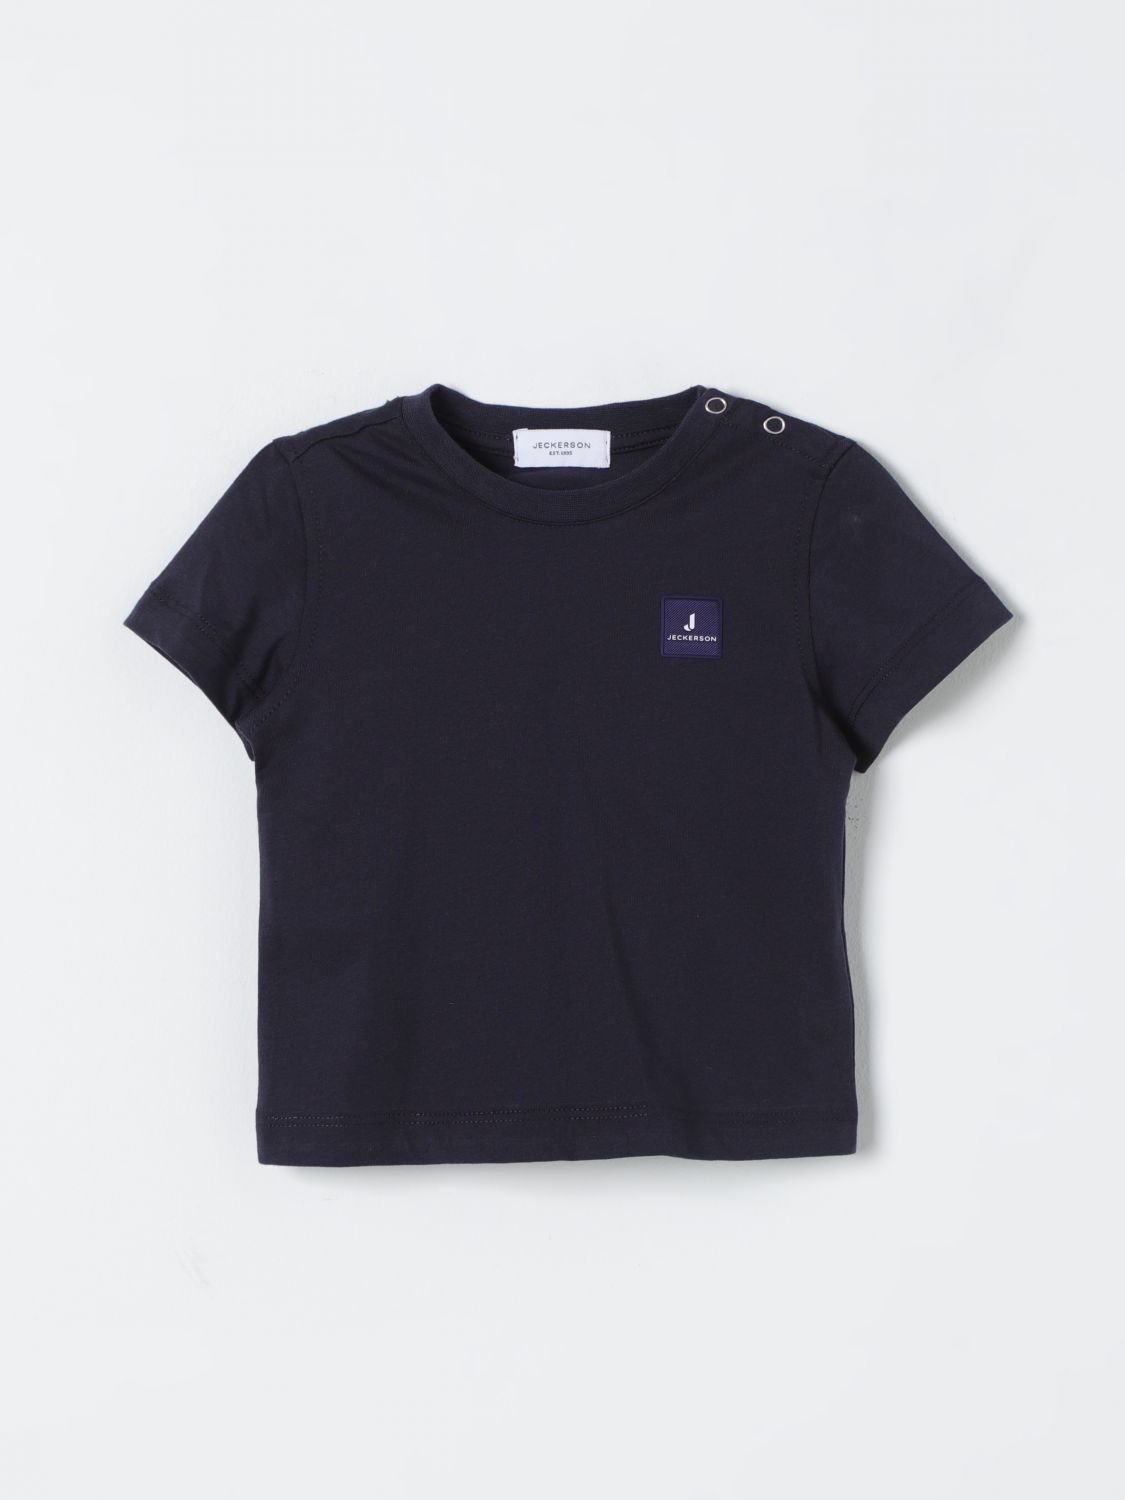 Jeckerson Babies' T-shirt  Kids Color Blue In Black